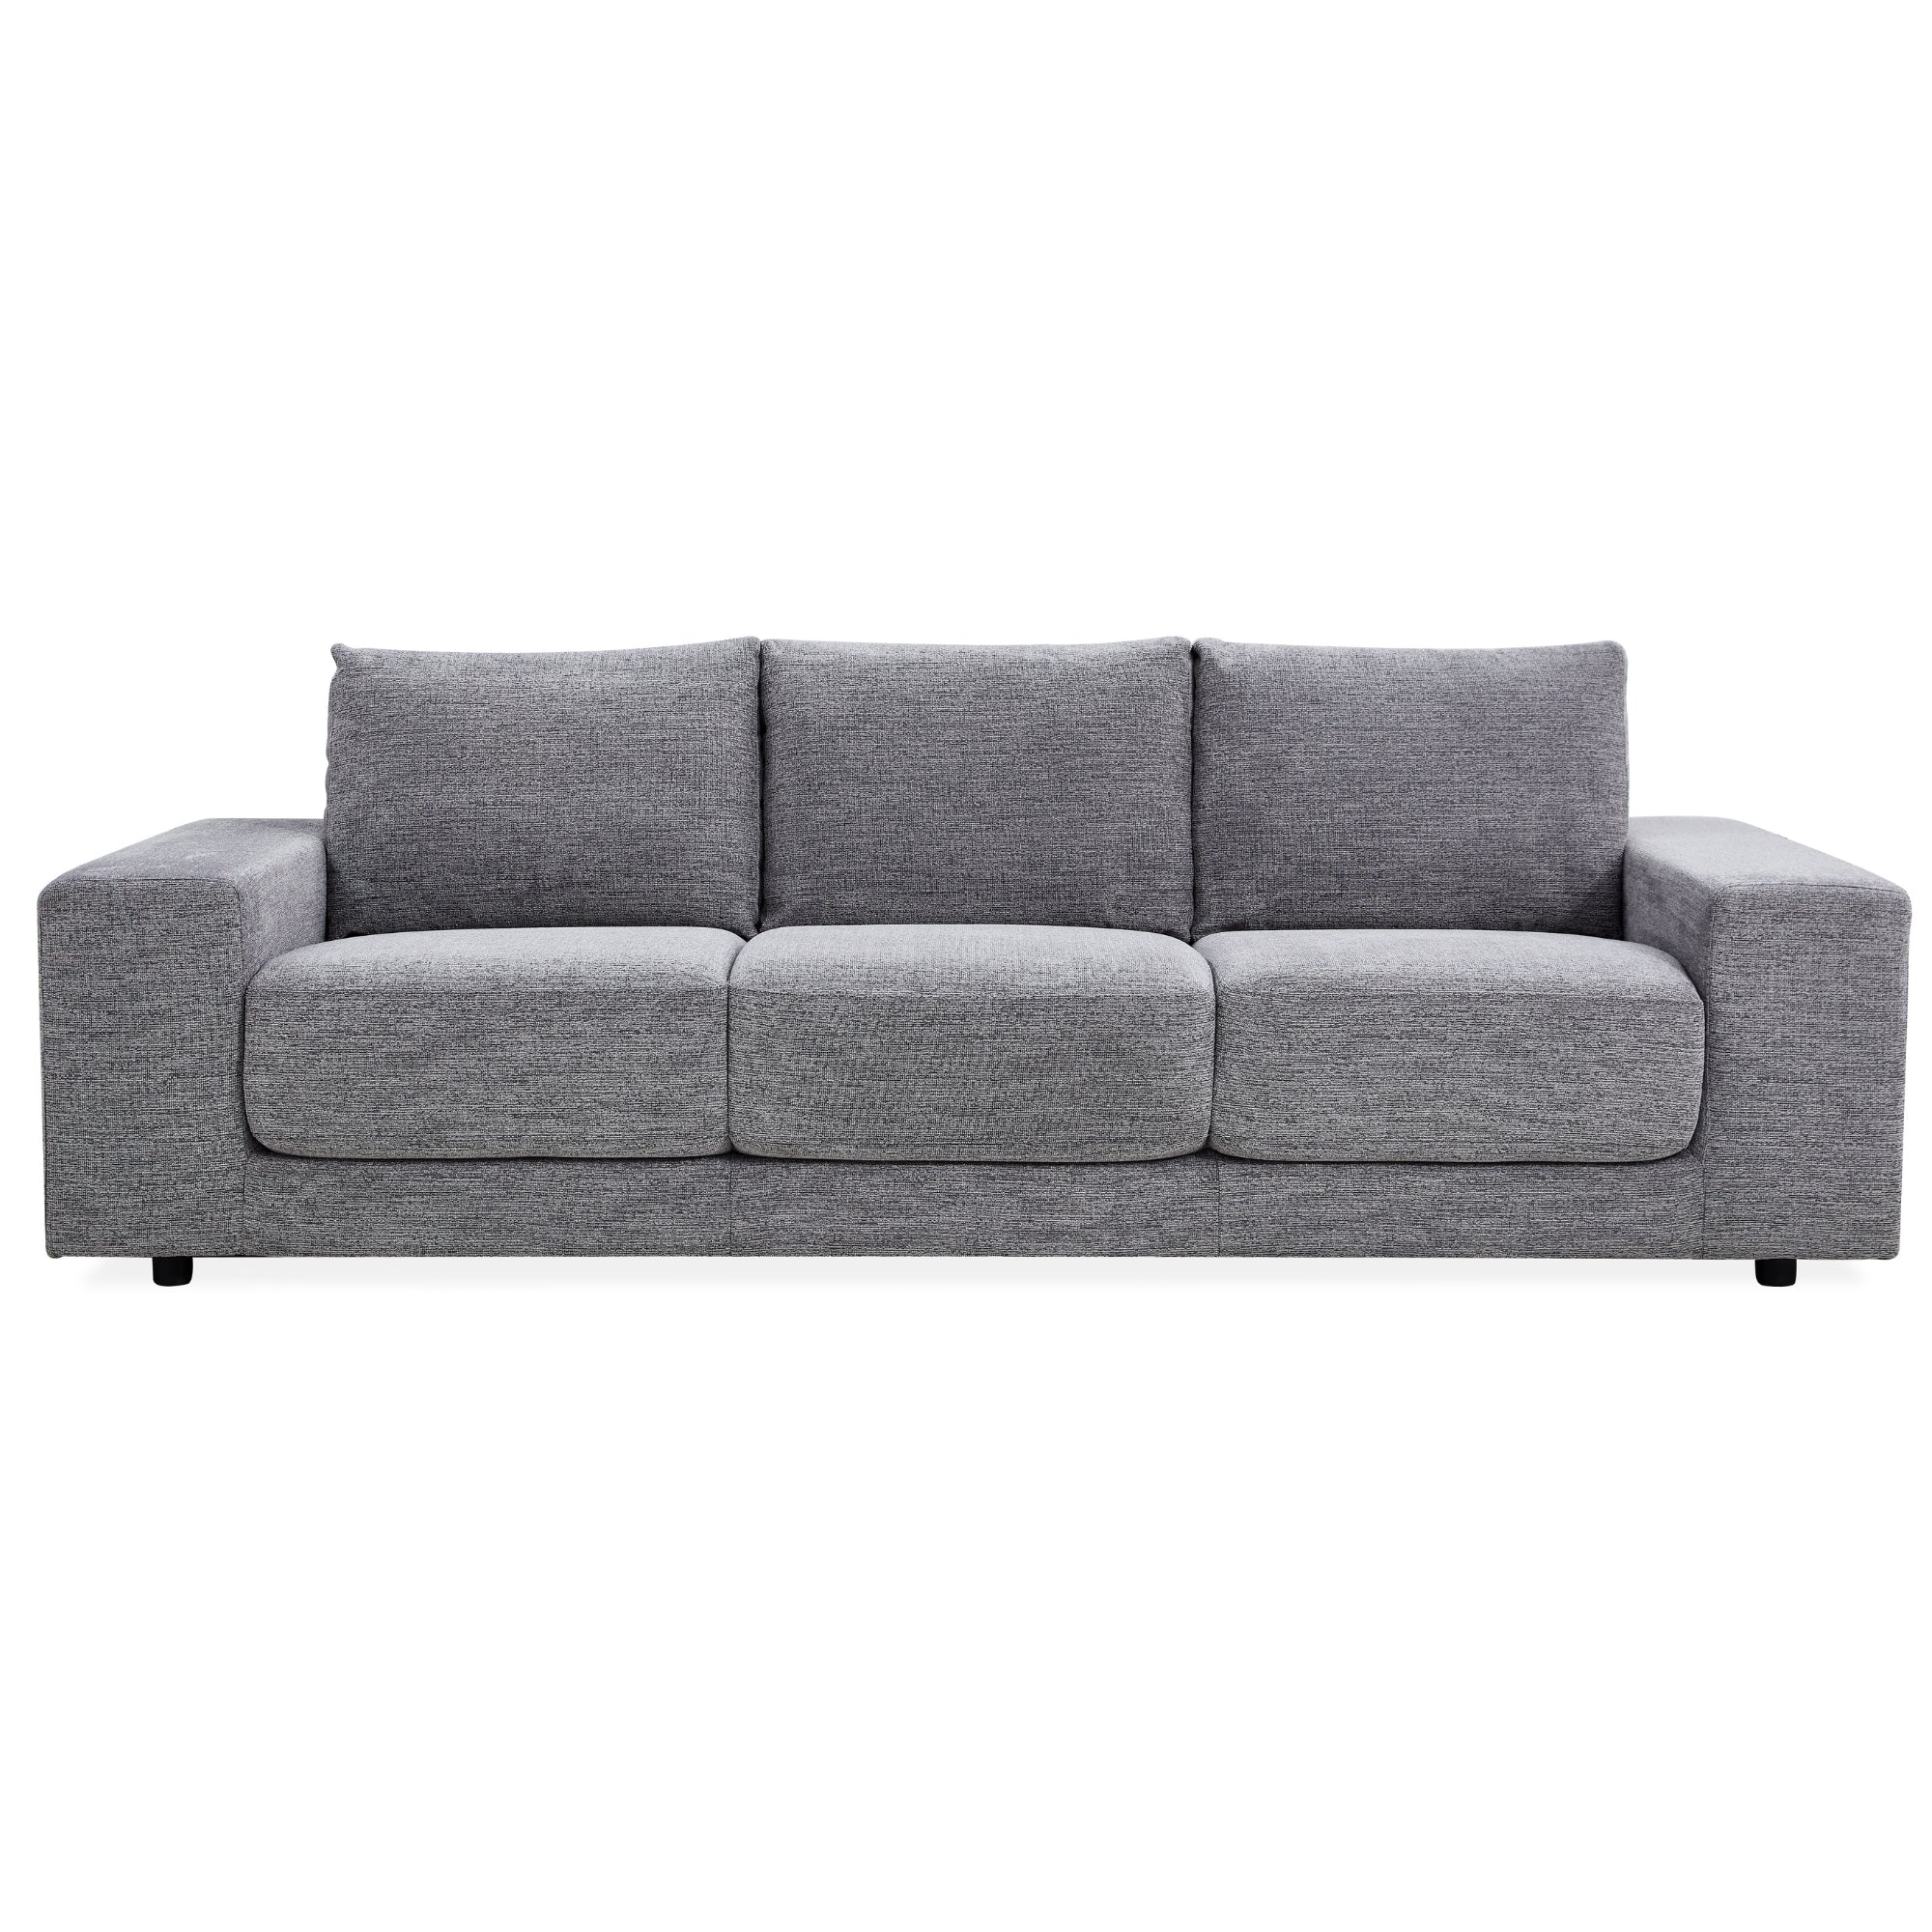 Eliana 4 Seater Sofa Fabric Uplholstered Lounge Couch - Fog